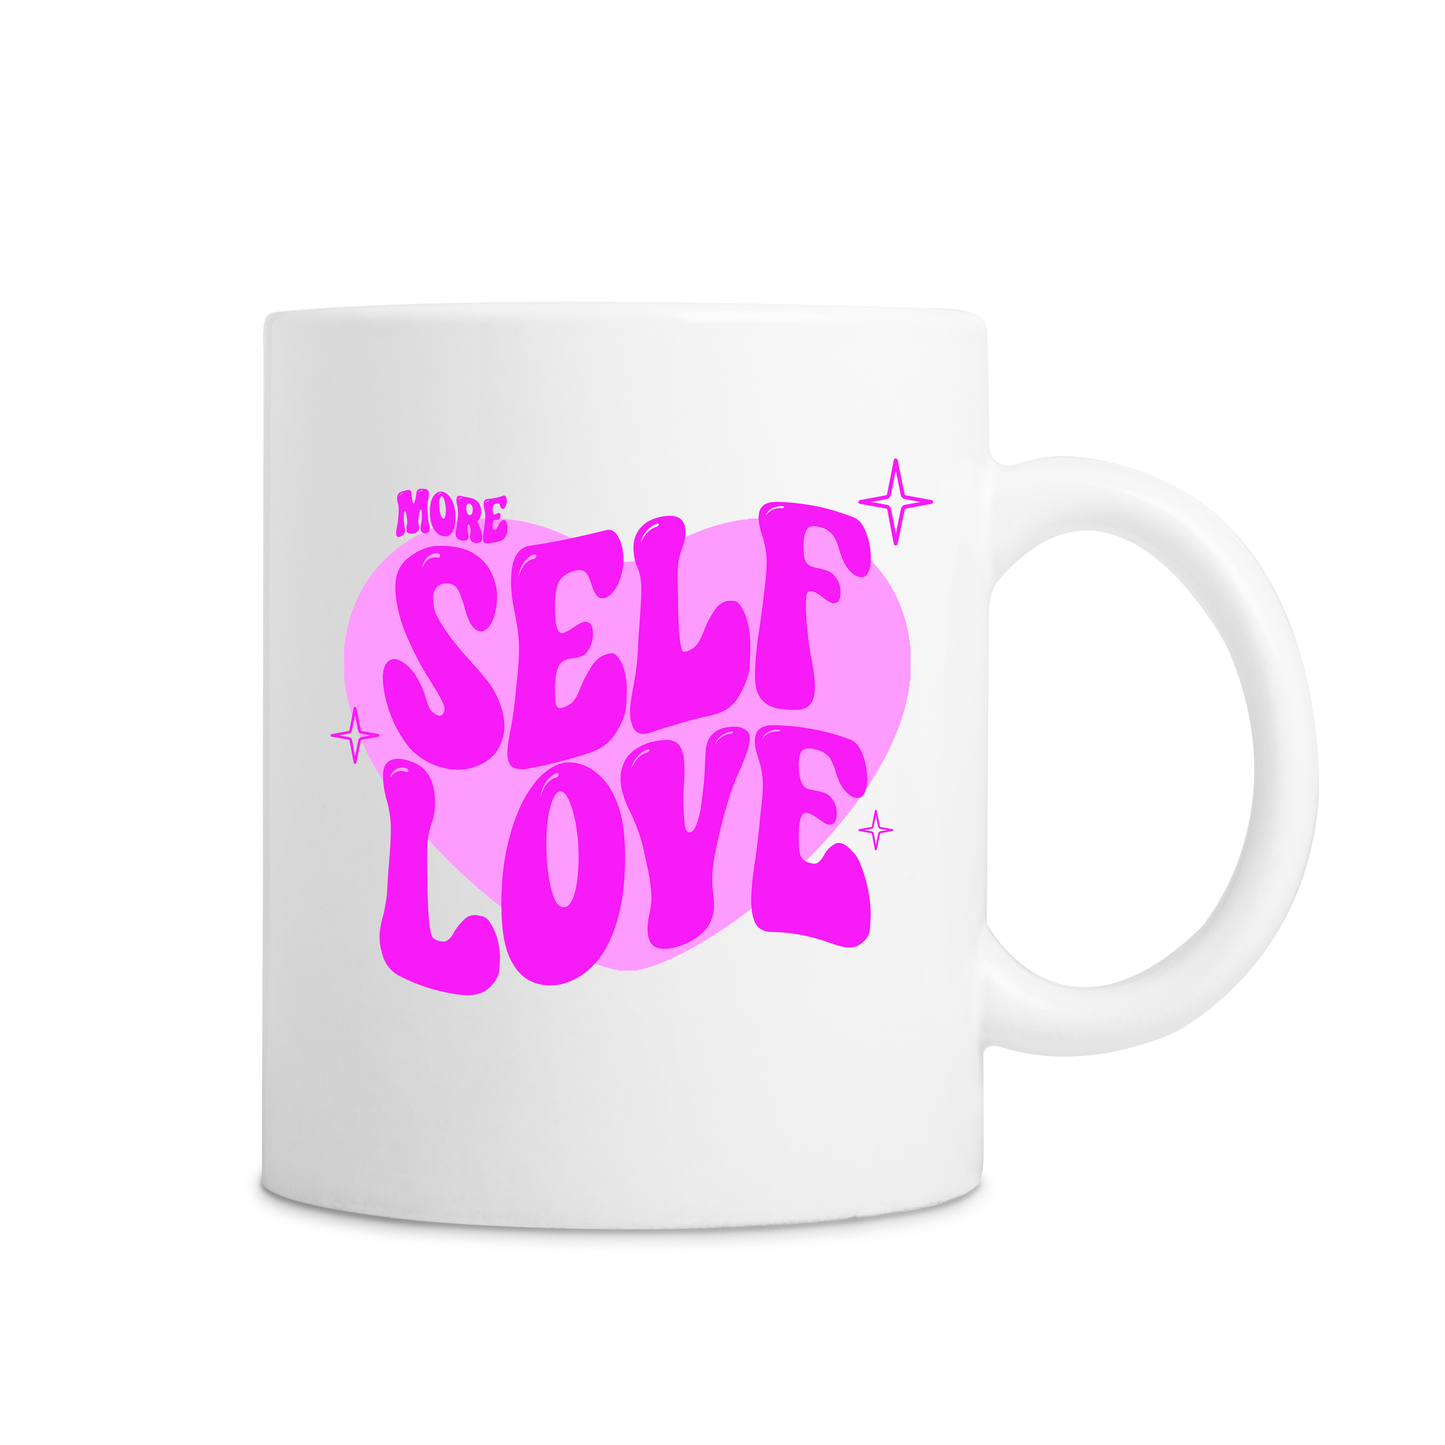 More Self Love Heart Mug - White